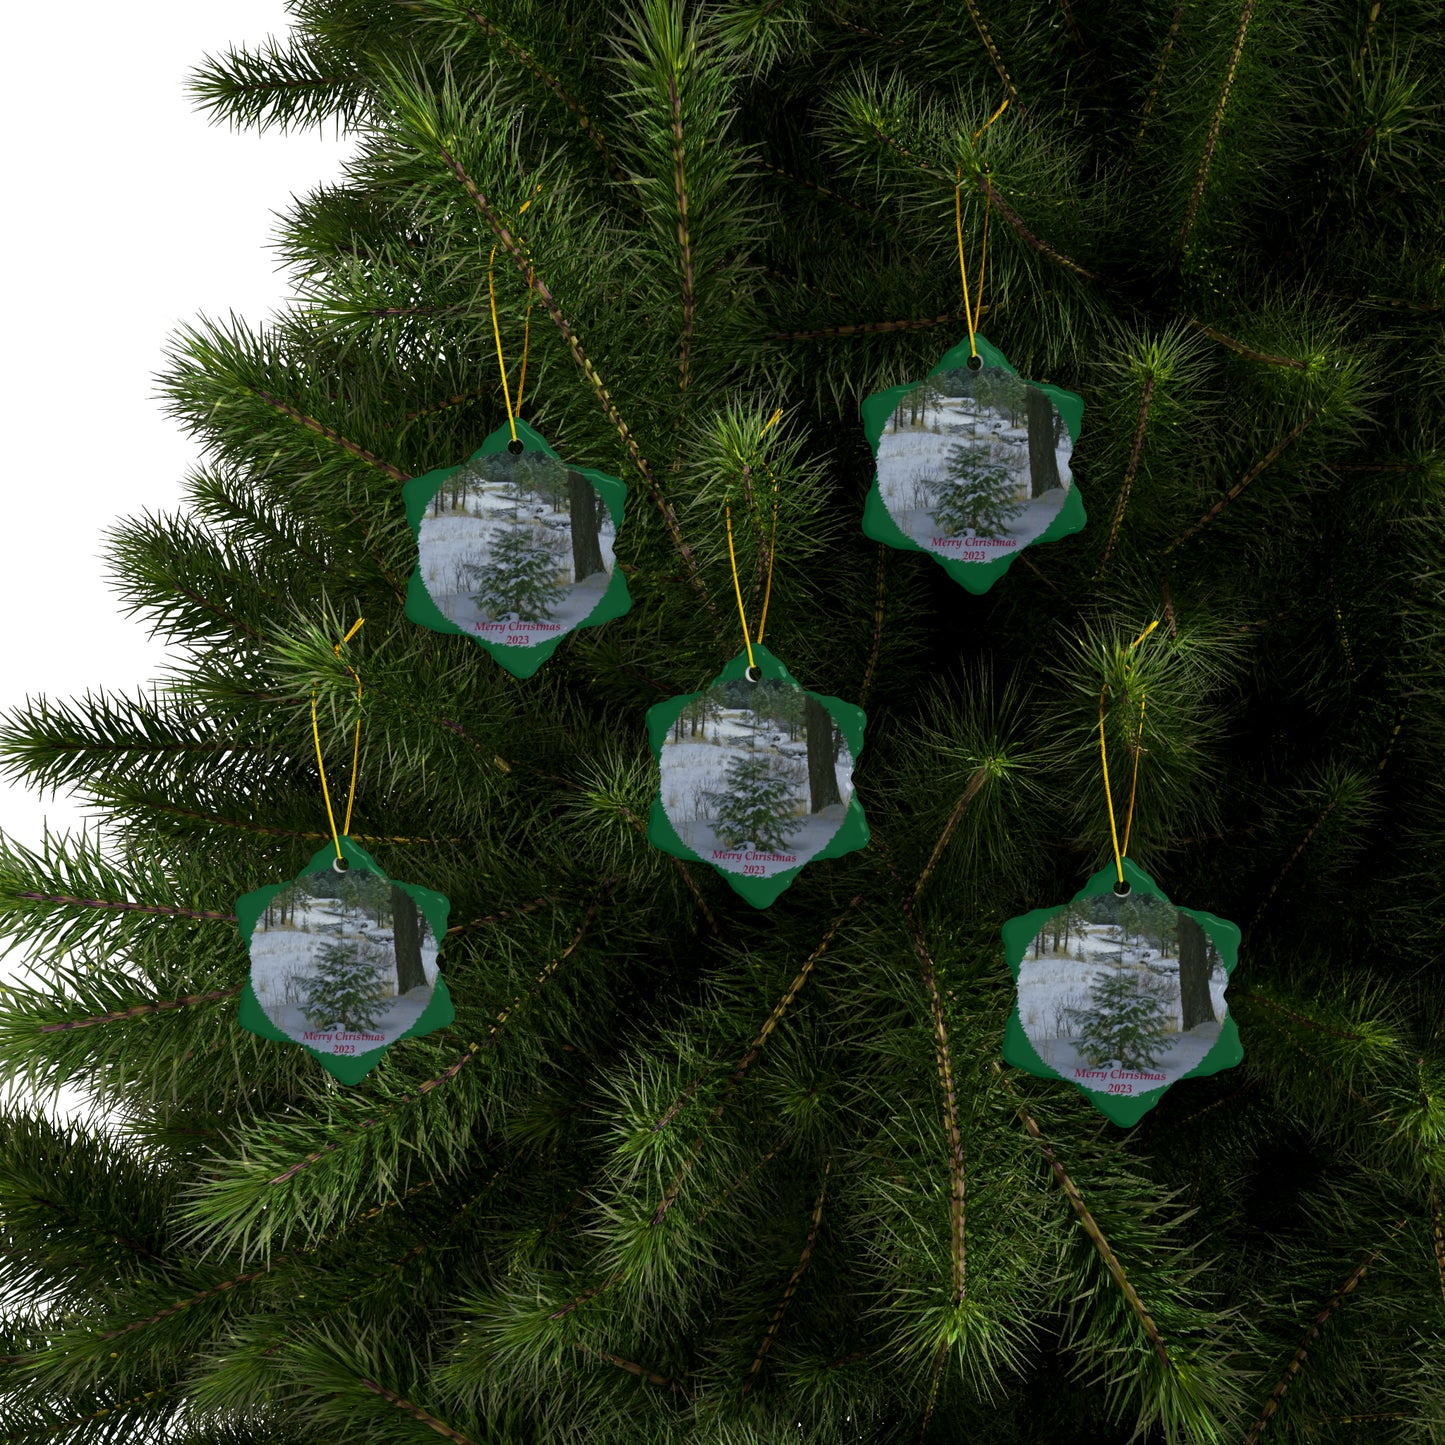 Christmas Tree Creek Merry Christmas 2023 Ceramic Ornaments